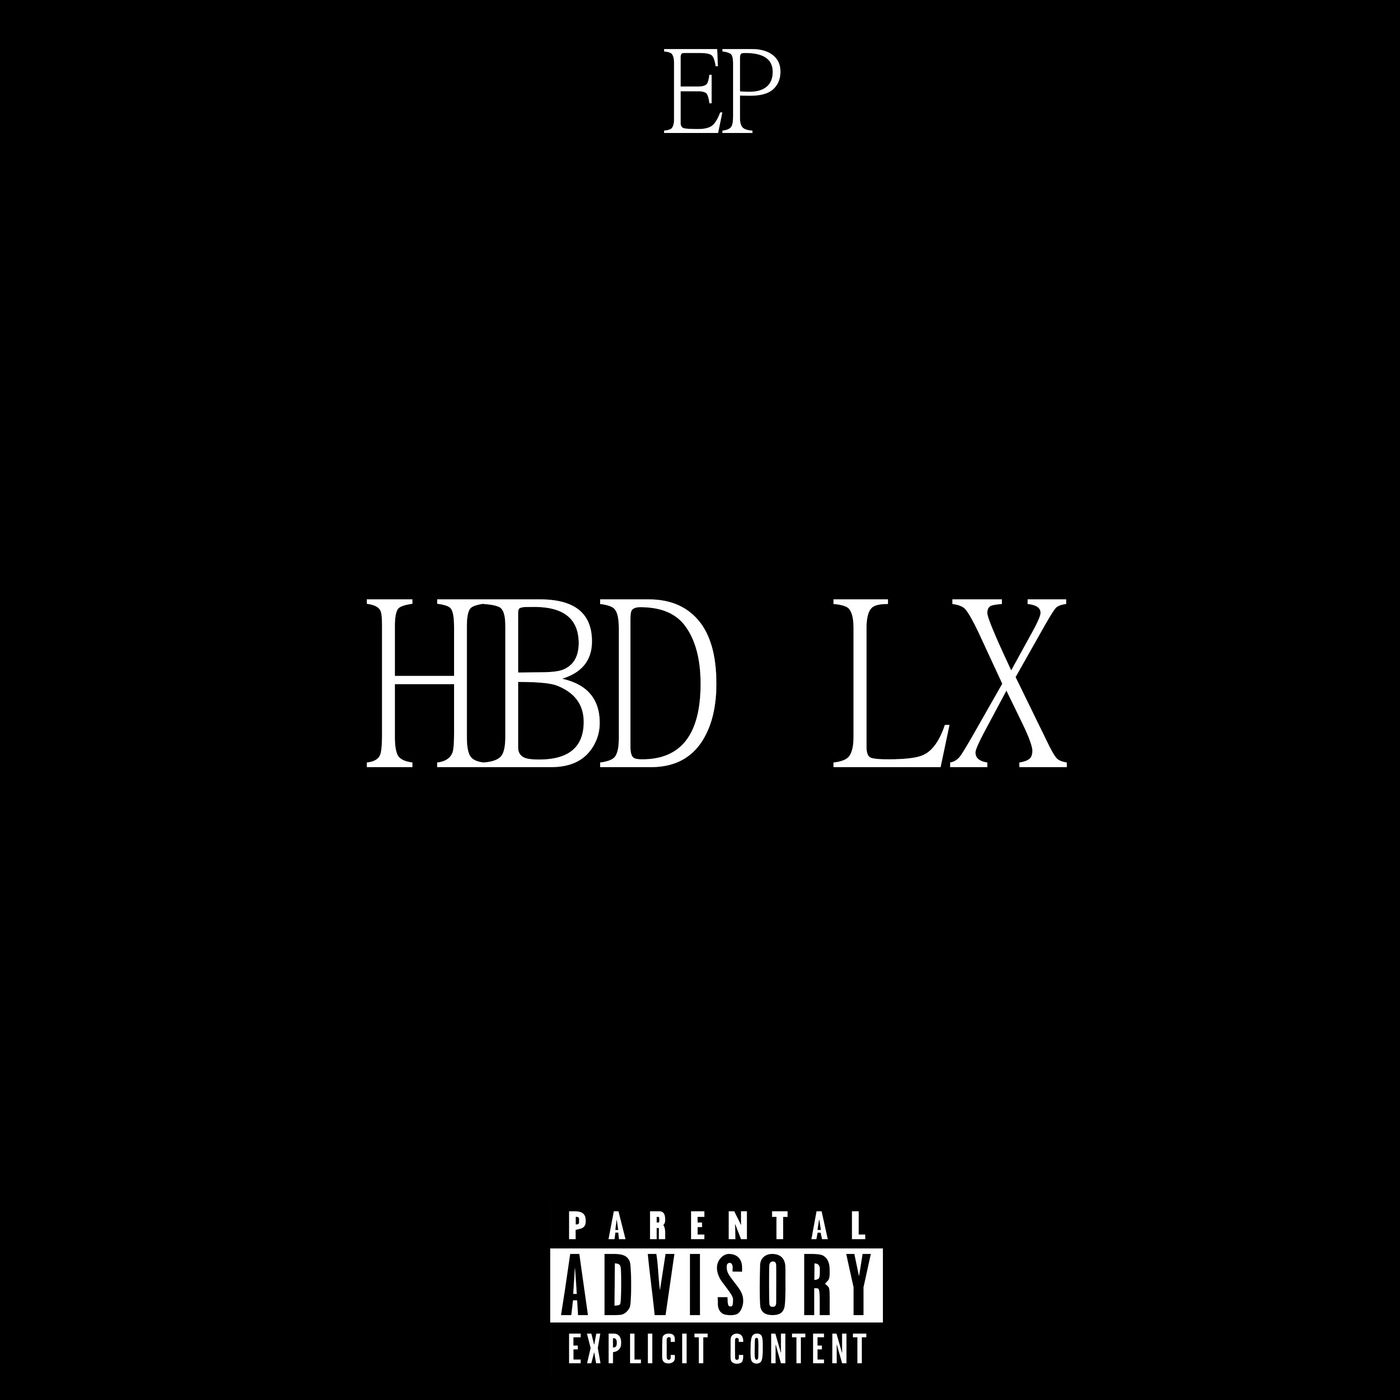 EP HBD LX